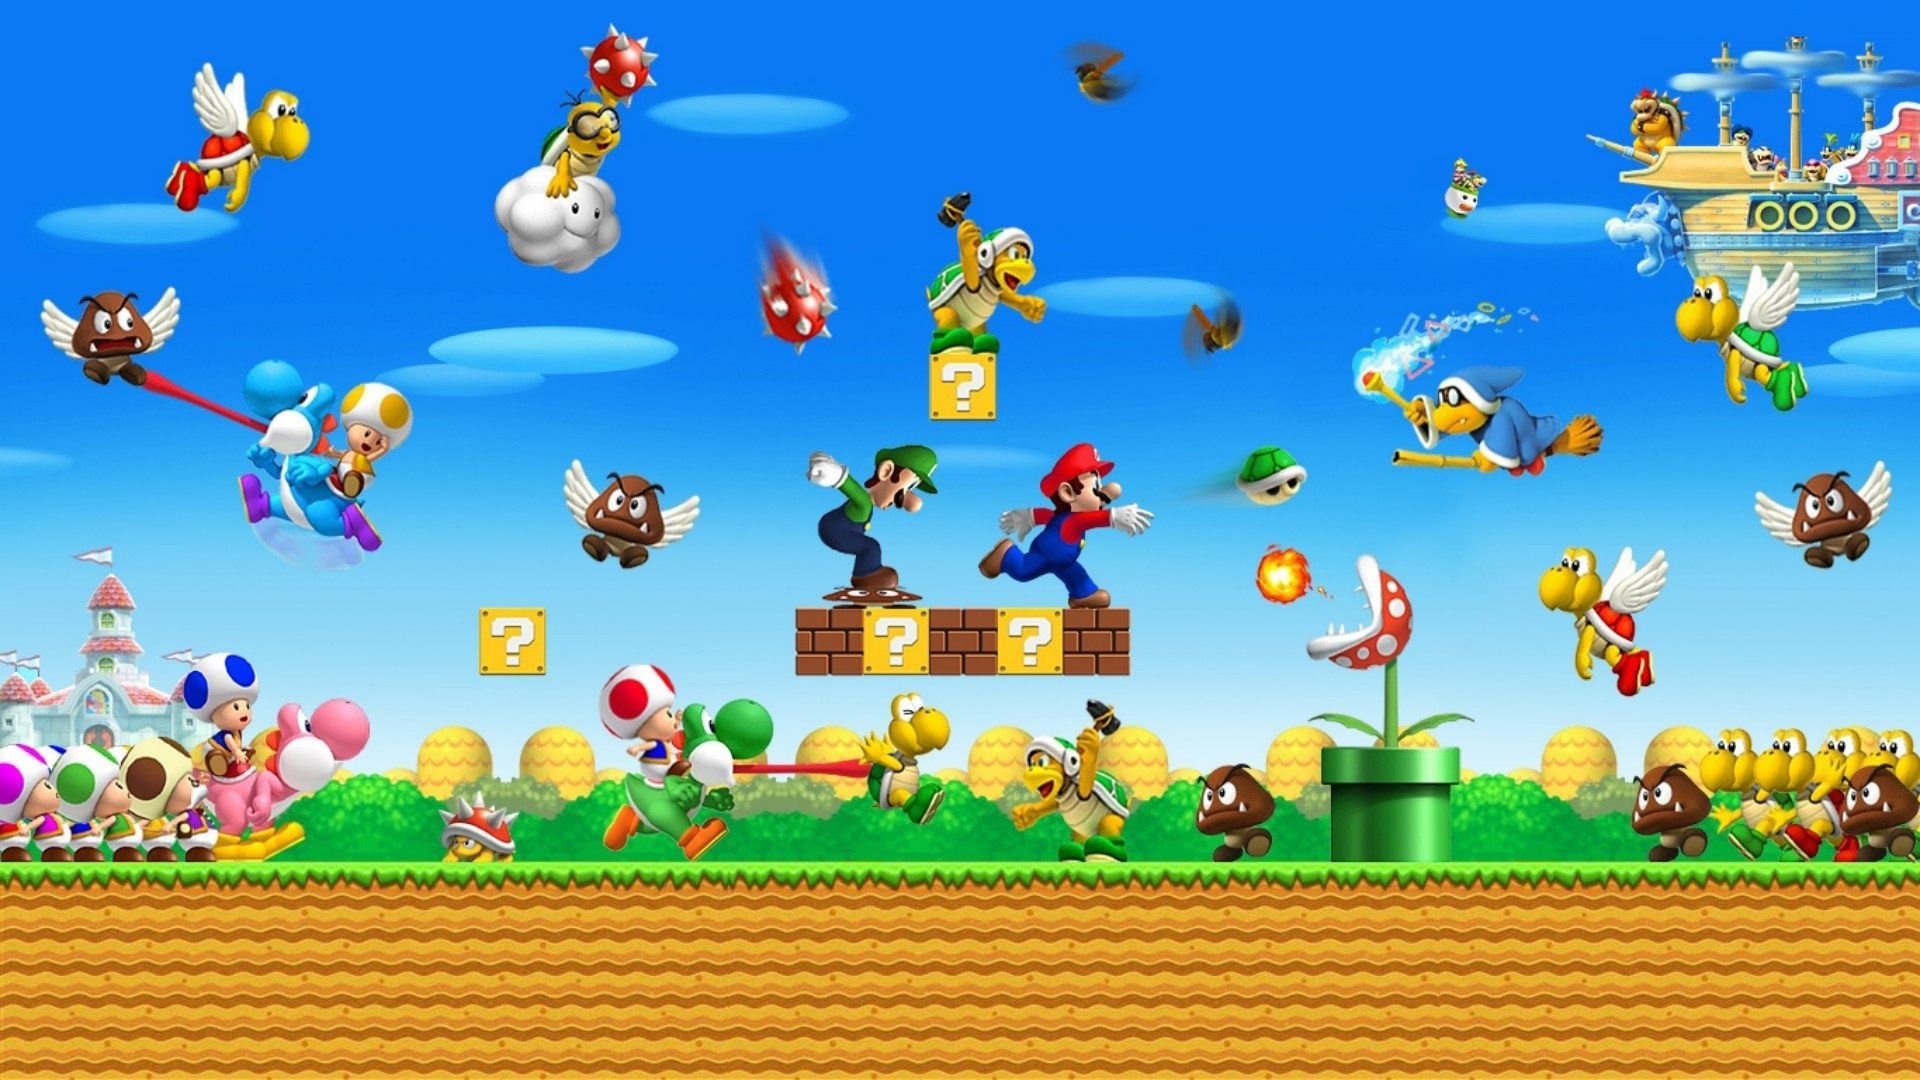 Super Mario Background. Wallpaper, Background, Image, Art Photo. Super mario bros games, Mario video game, Mario bros